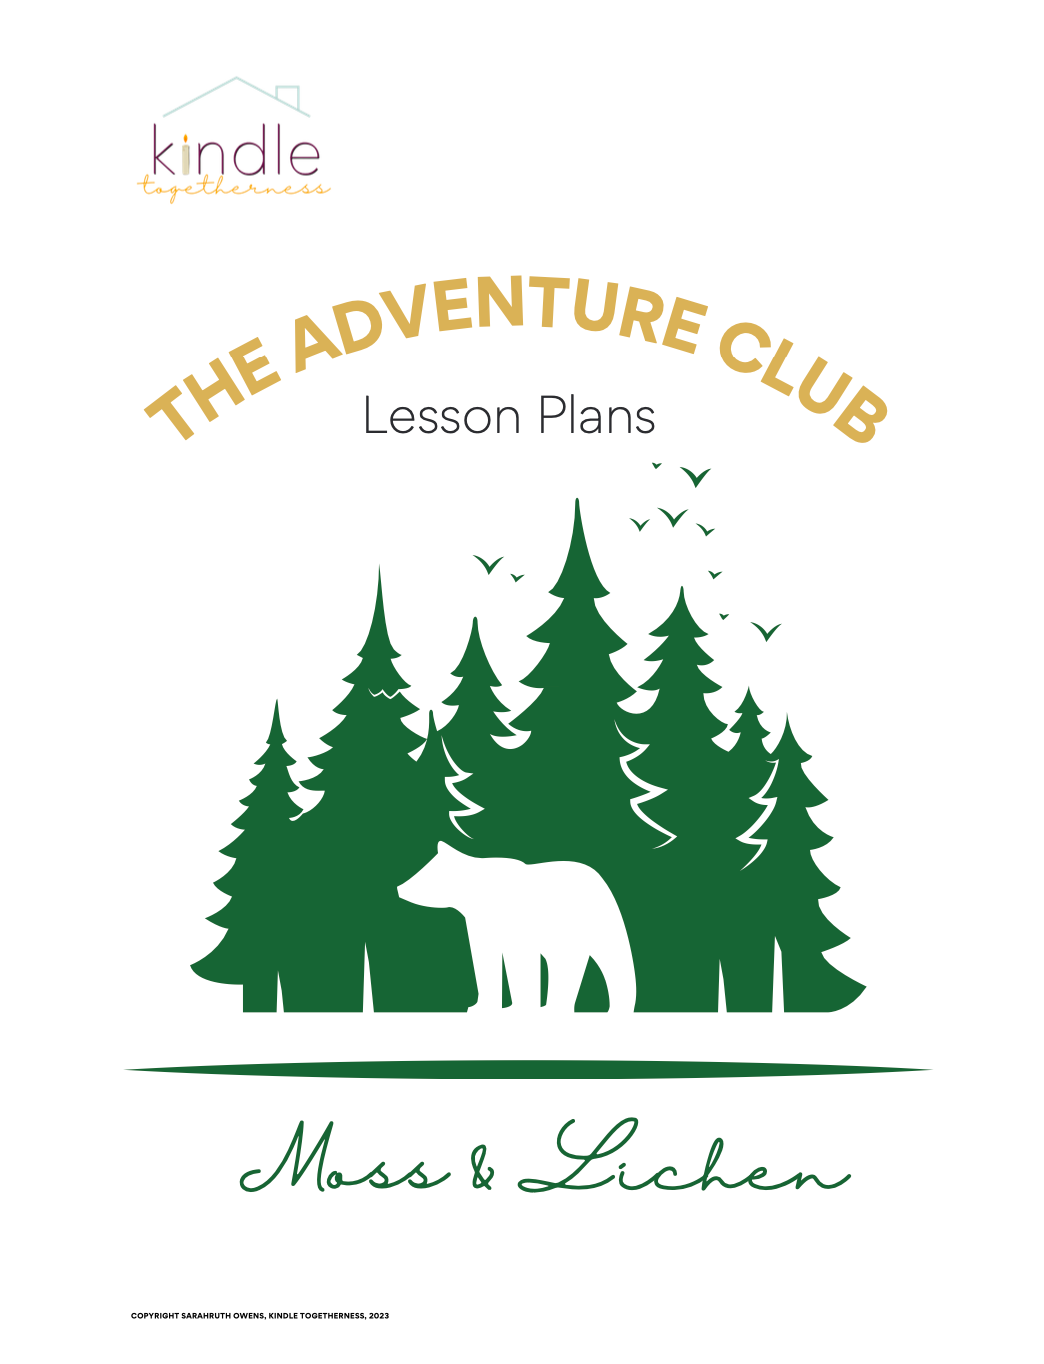 Moss & Lichen Adventure Club Lesson Plans